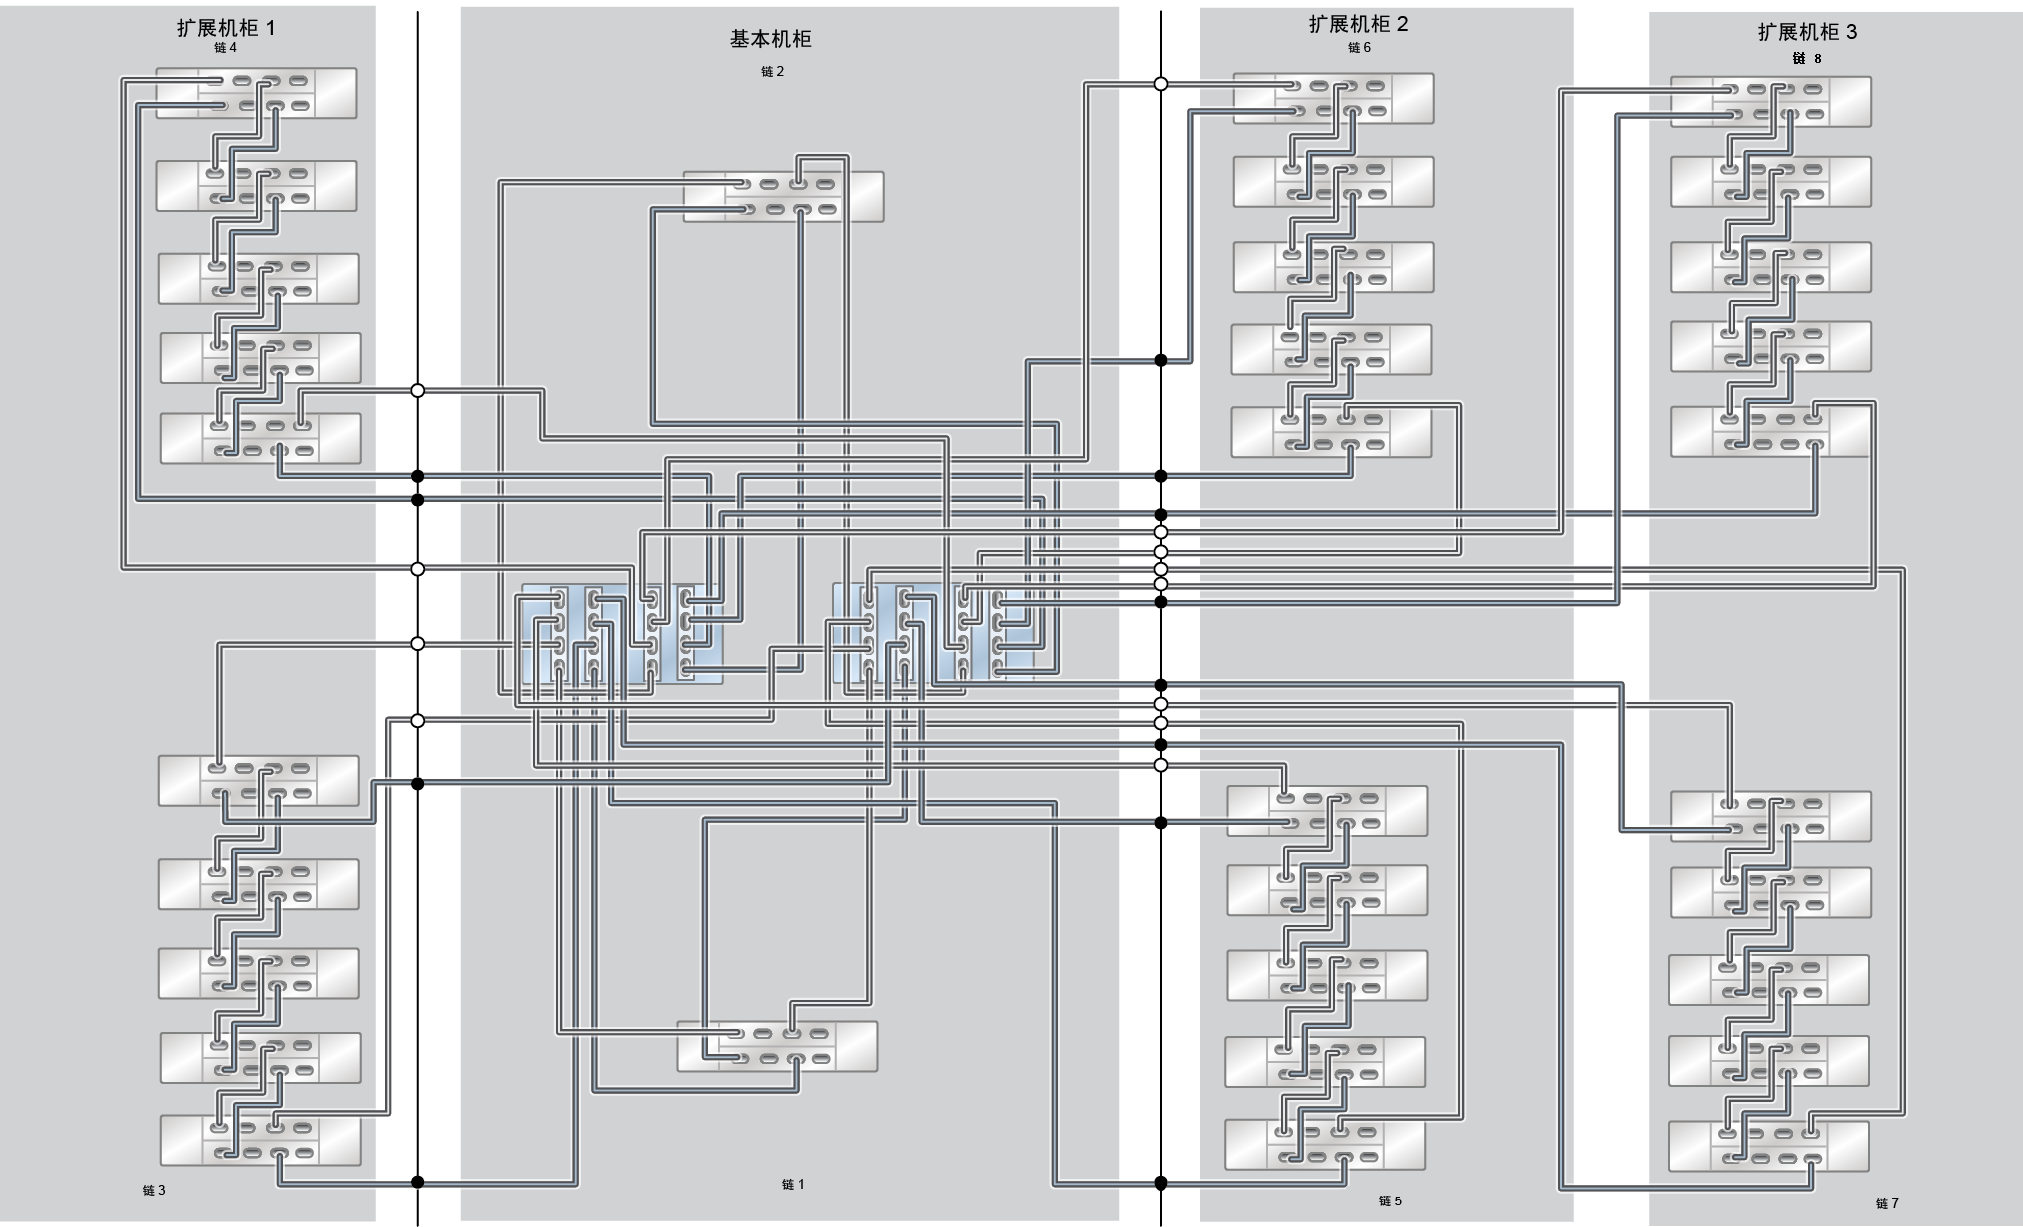 image:此图显示了具有三个扩展机柜（30 个 DE3-24C 磁盘机框）的 ZS7-2 HE Racked System 全闪存。